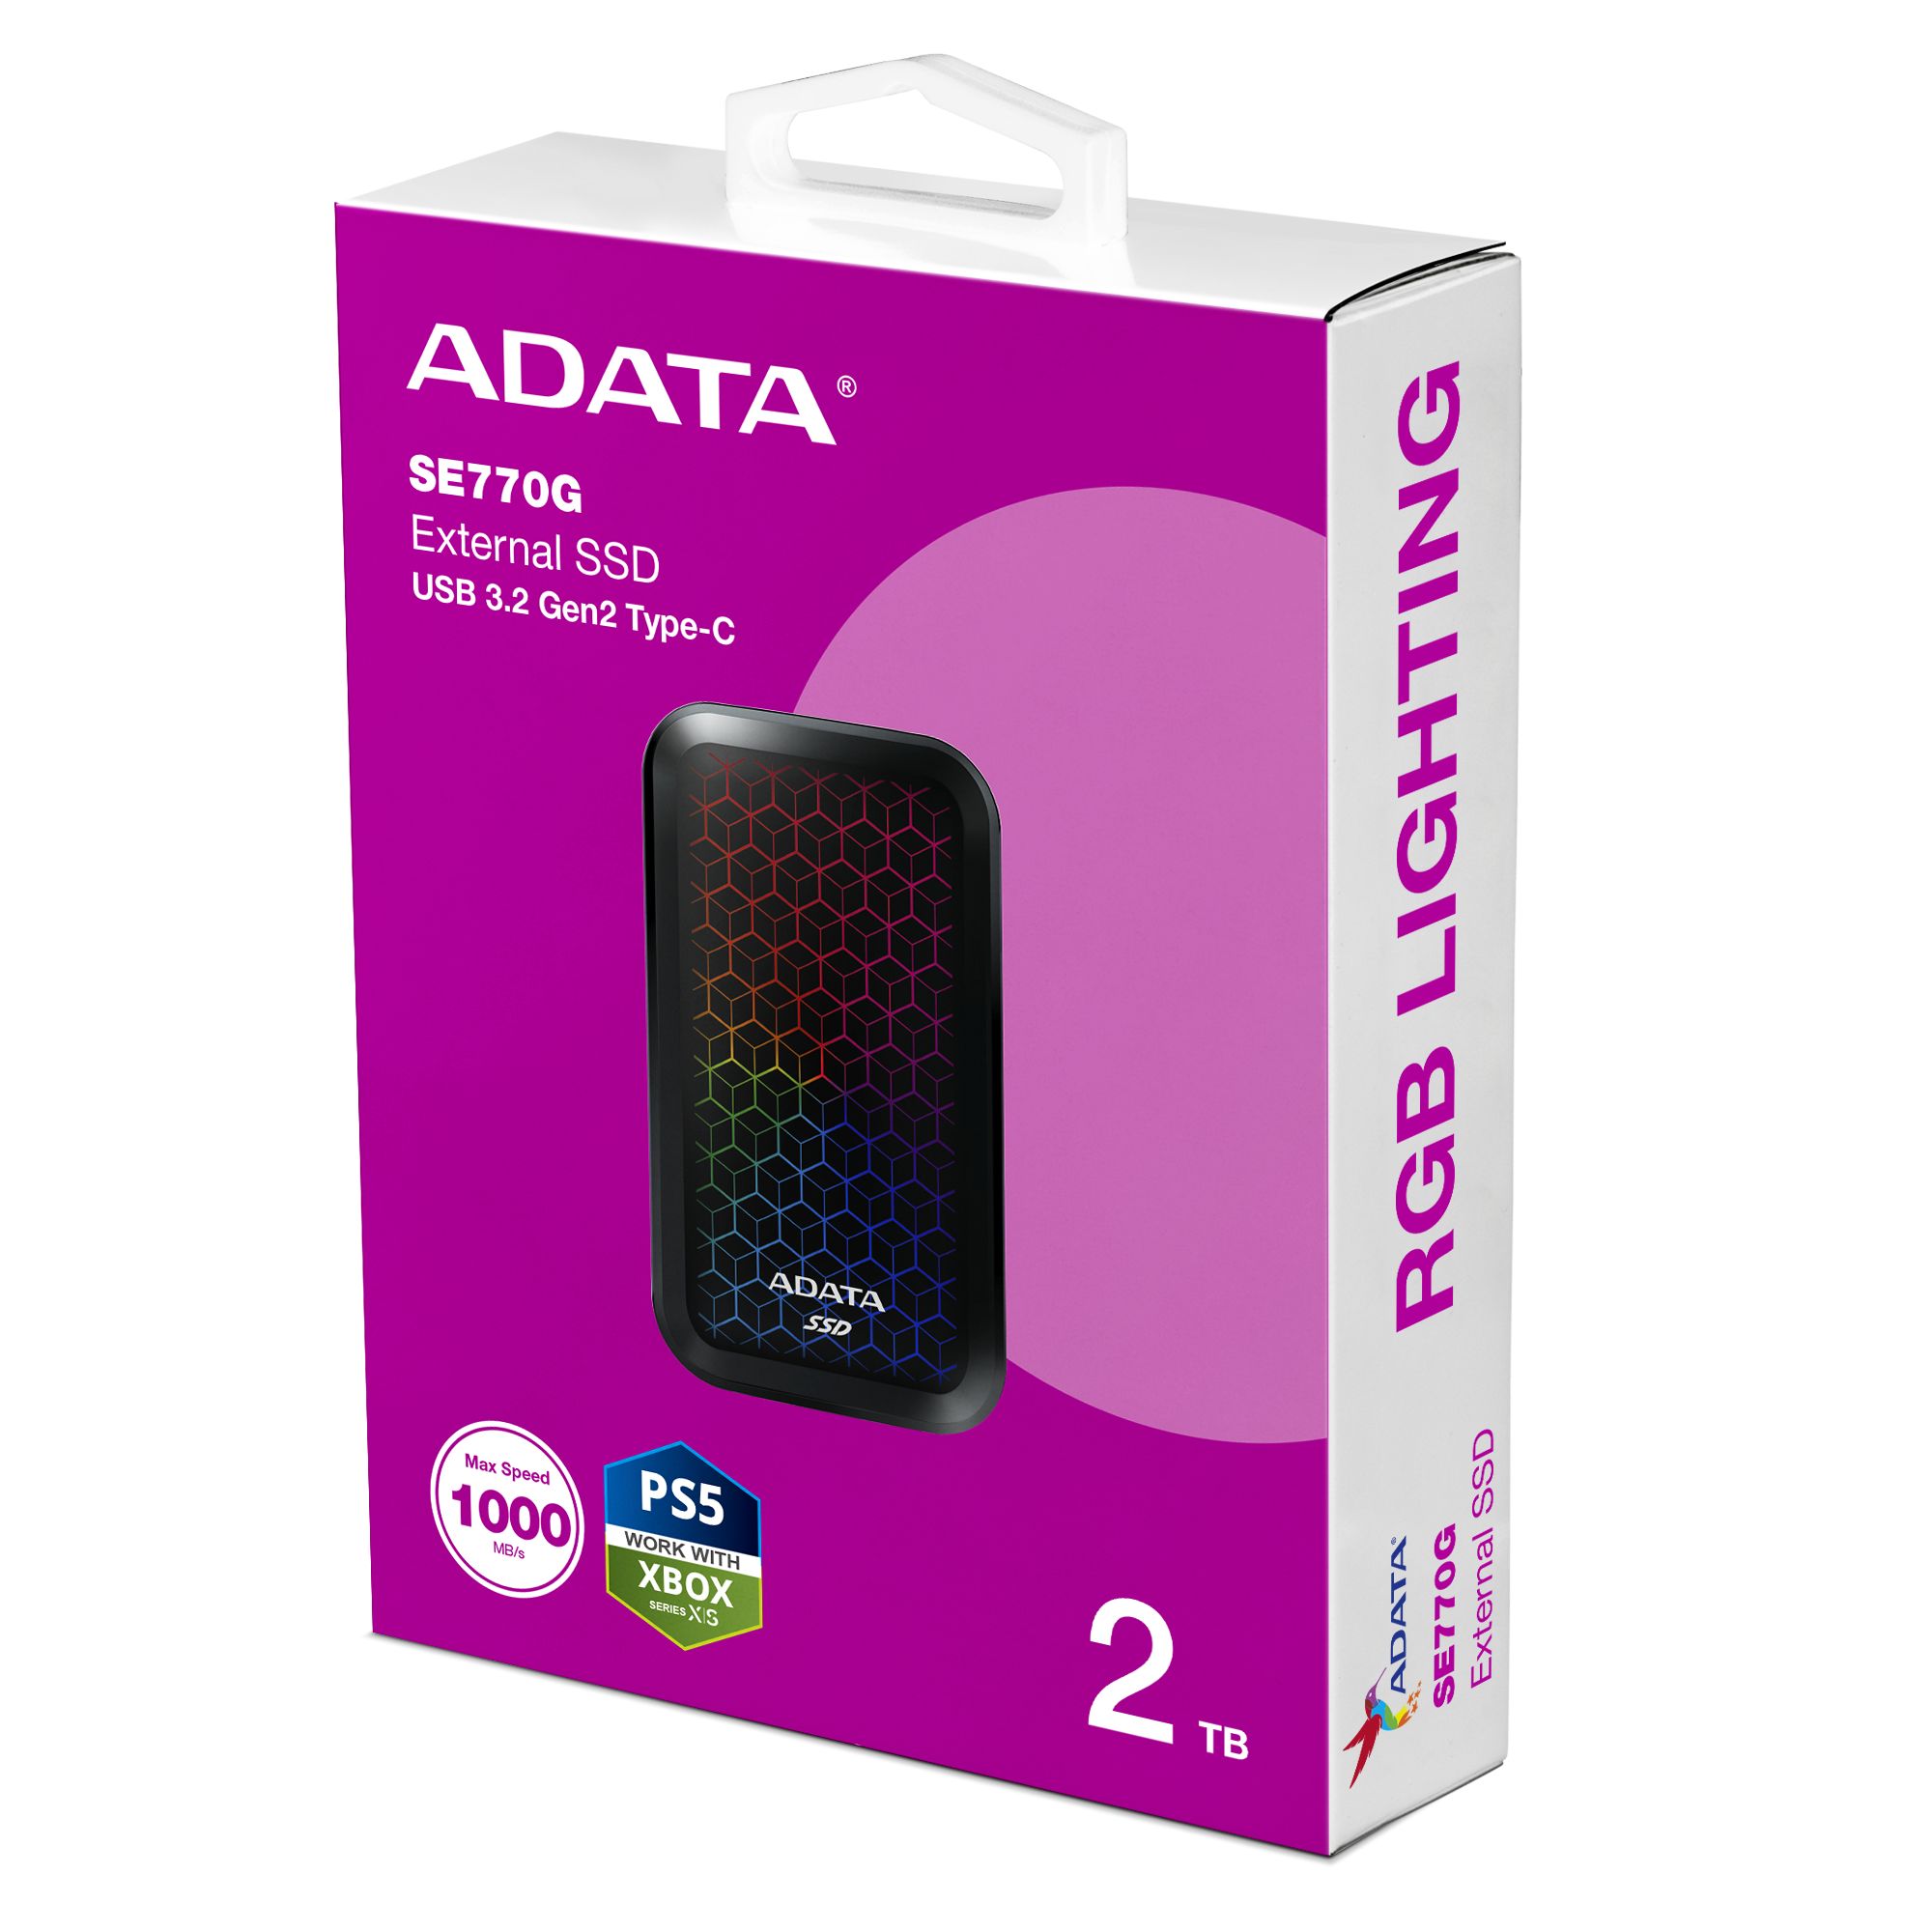 ADATA EXTERNAL SSD SE770G 2TB BK COLOR_2